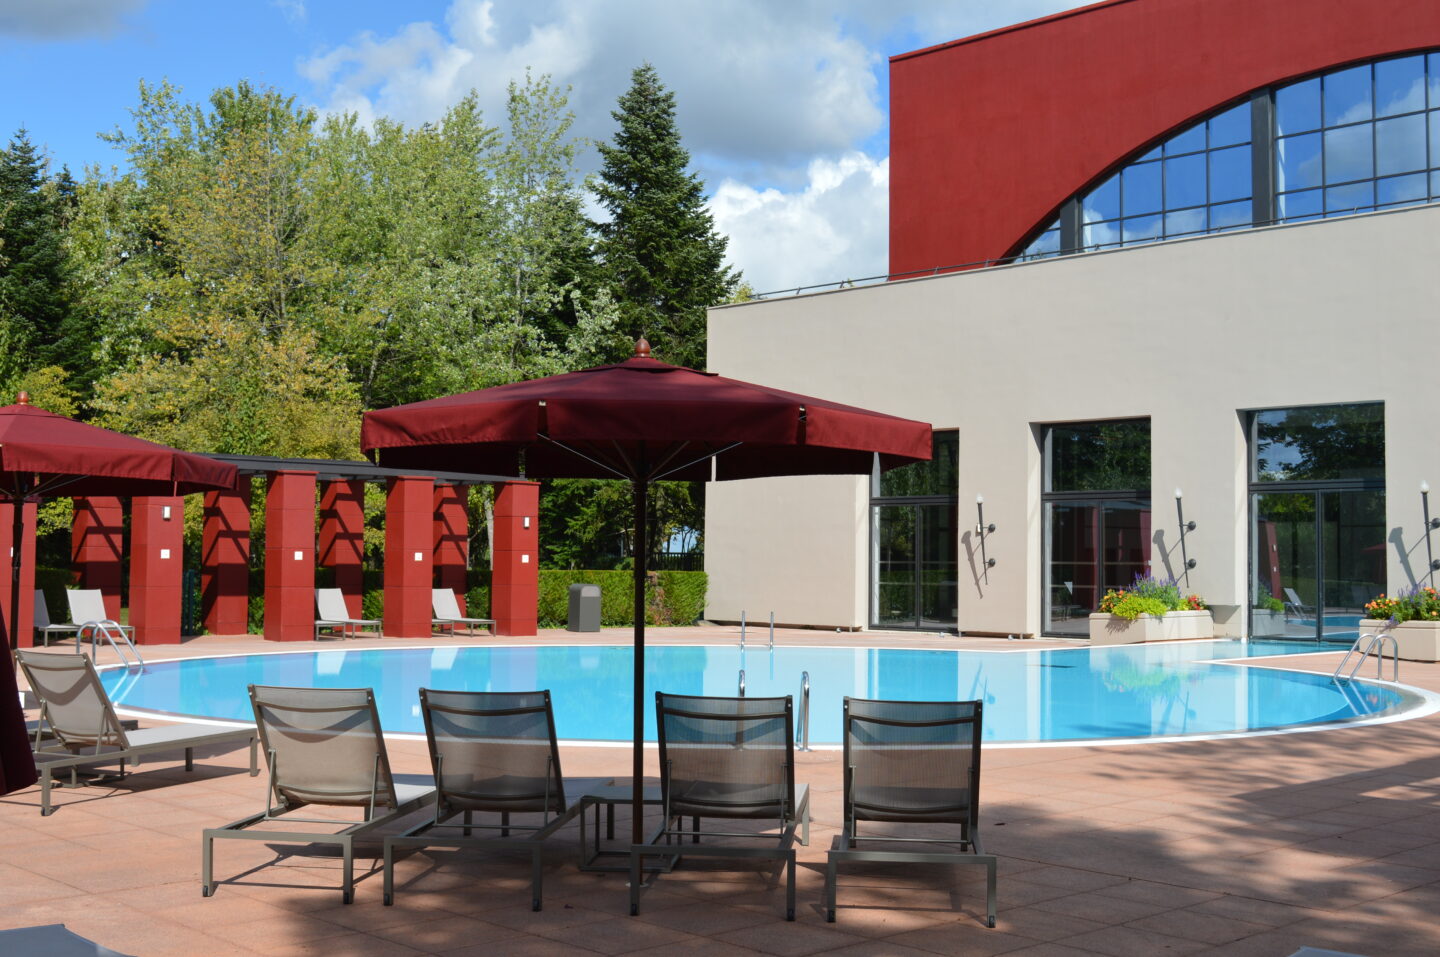 disneyland paris hotels with swimming pools
